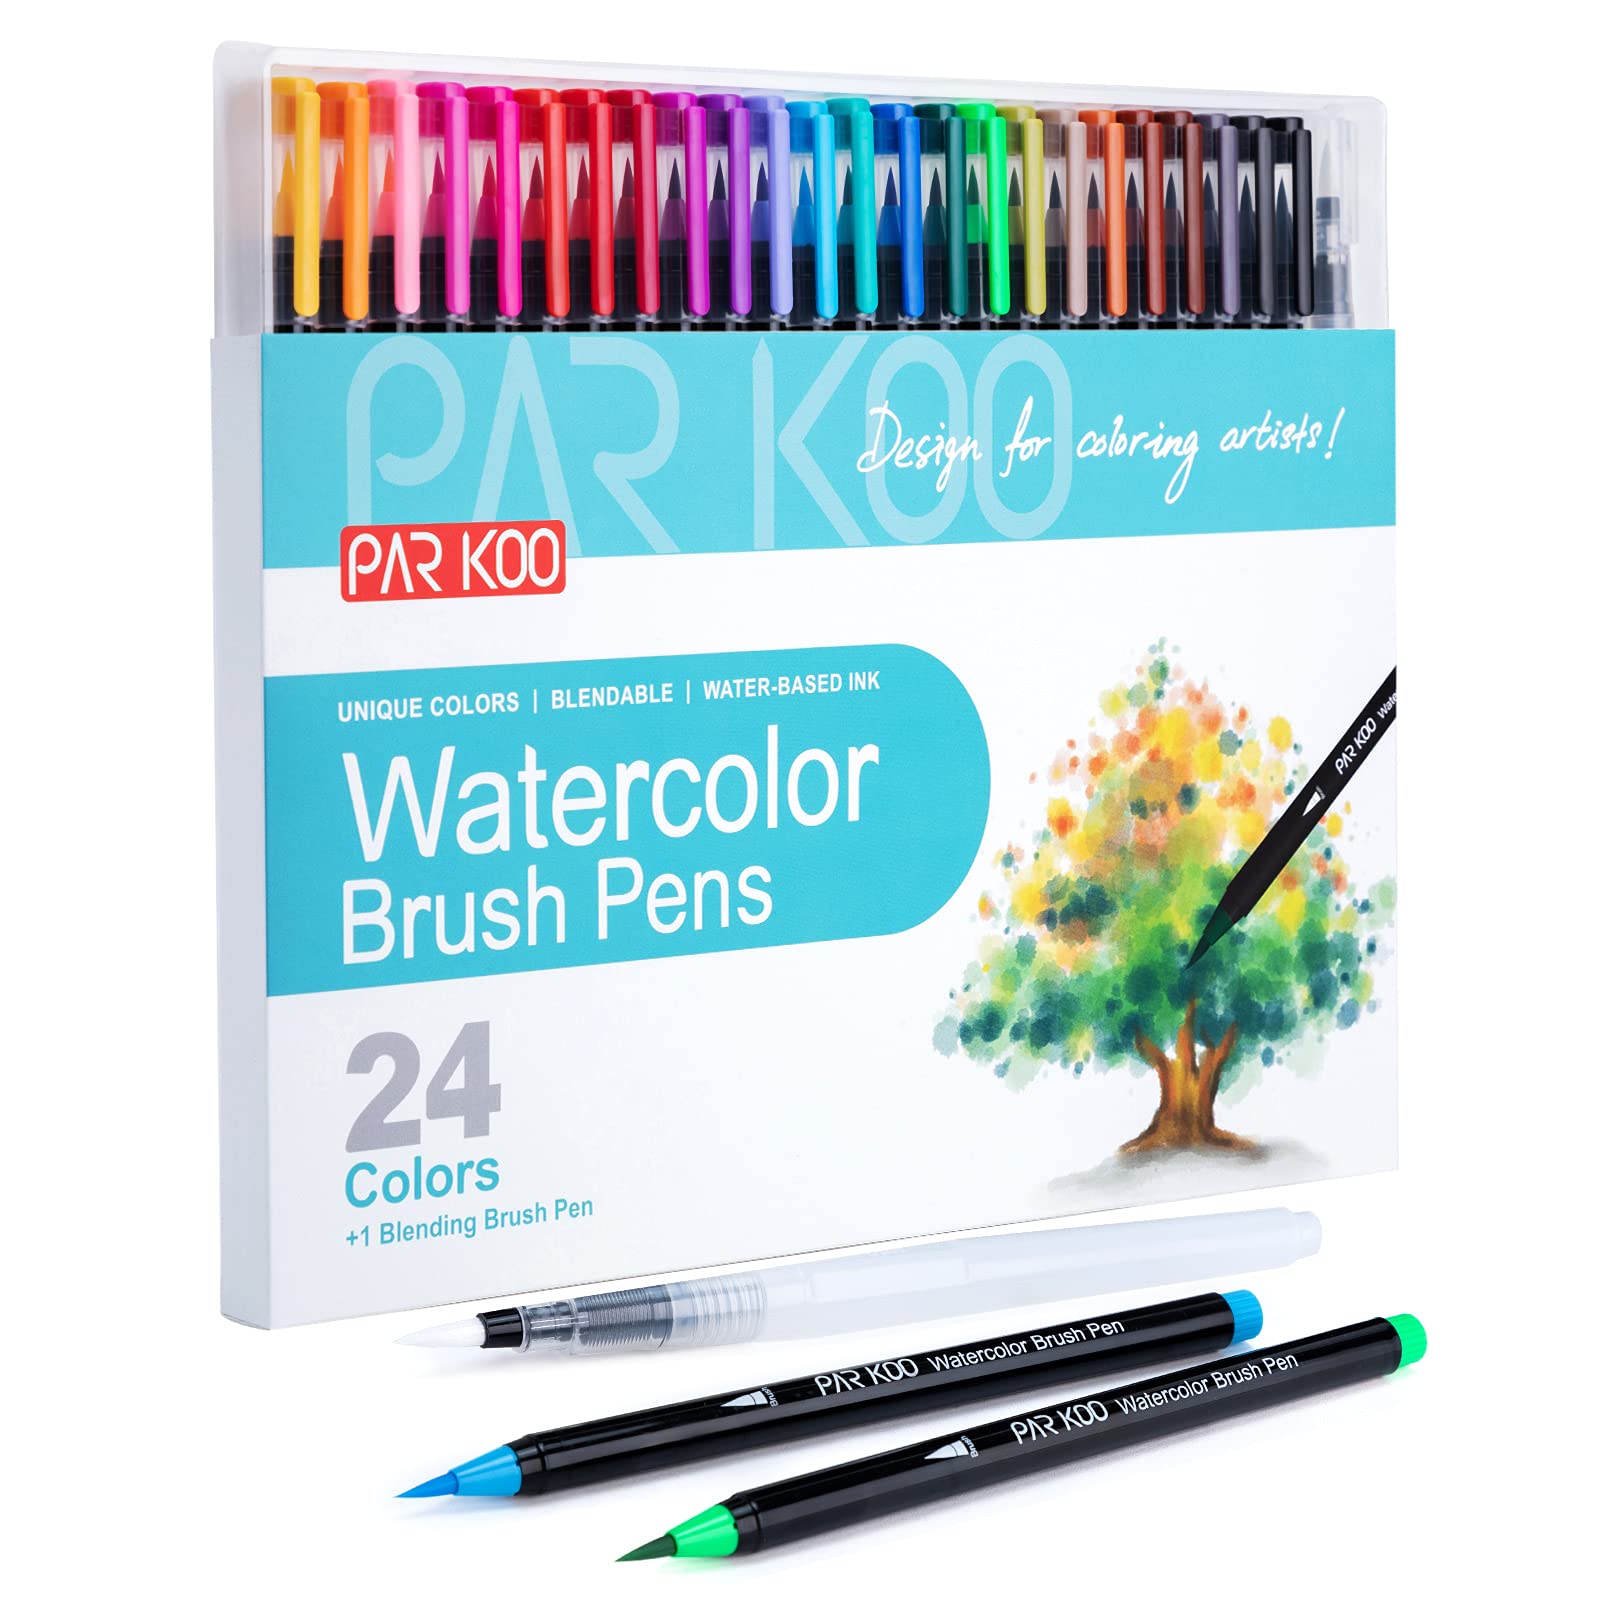 ParKoo Watercolor Brush Pens 24 Colors Flexible Real Nylon Brush